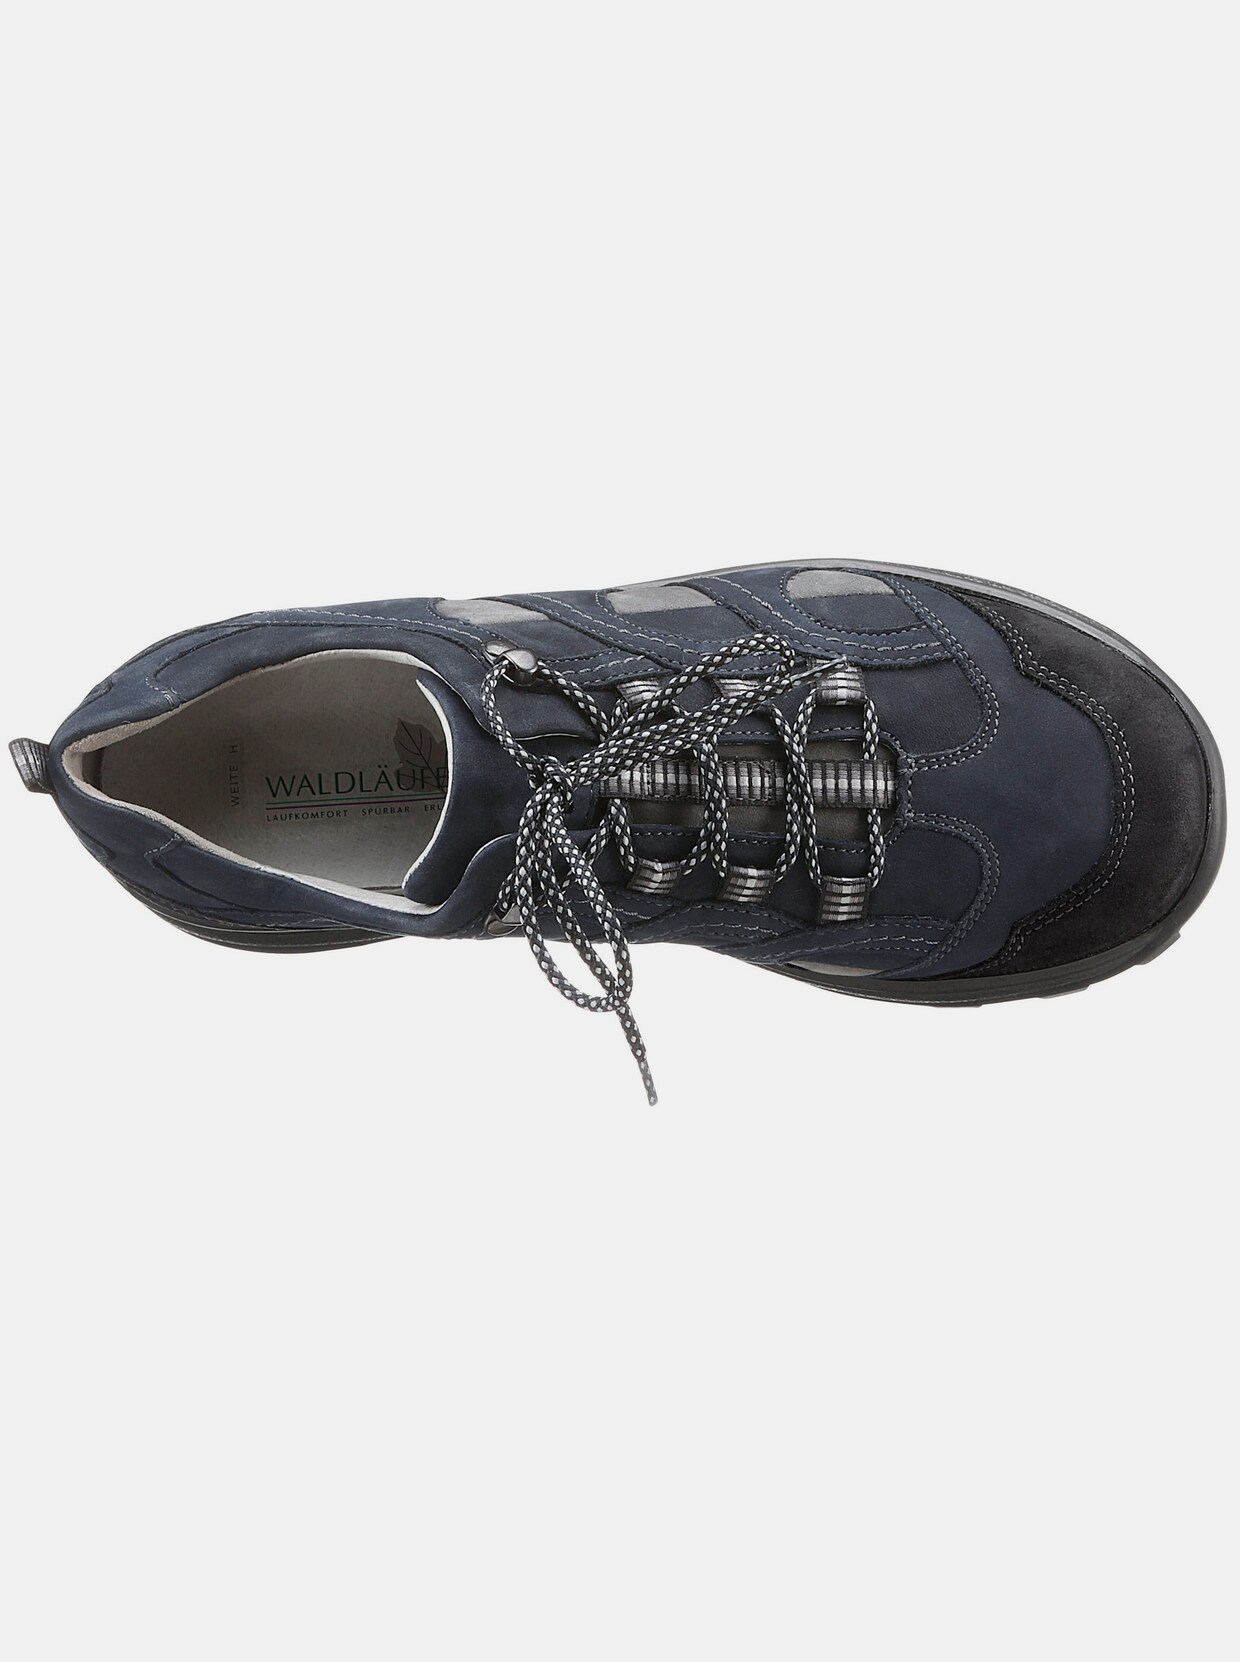 Waldläufer Chaussures à lacets - marine-noir